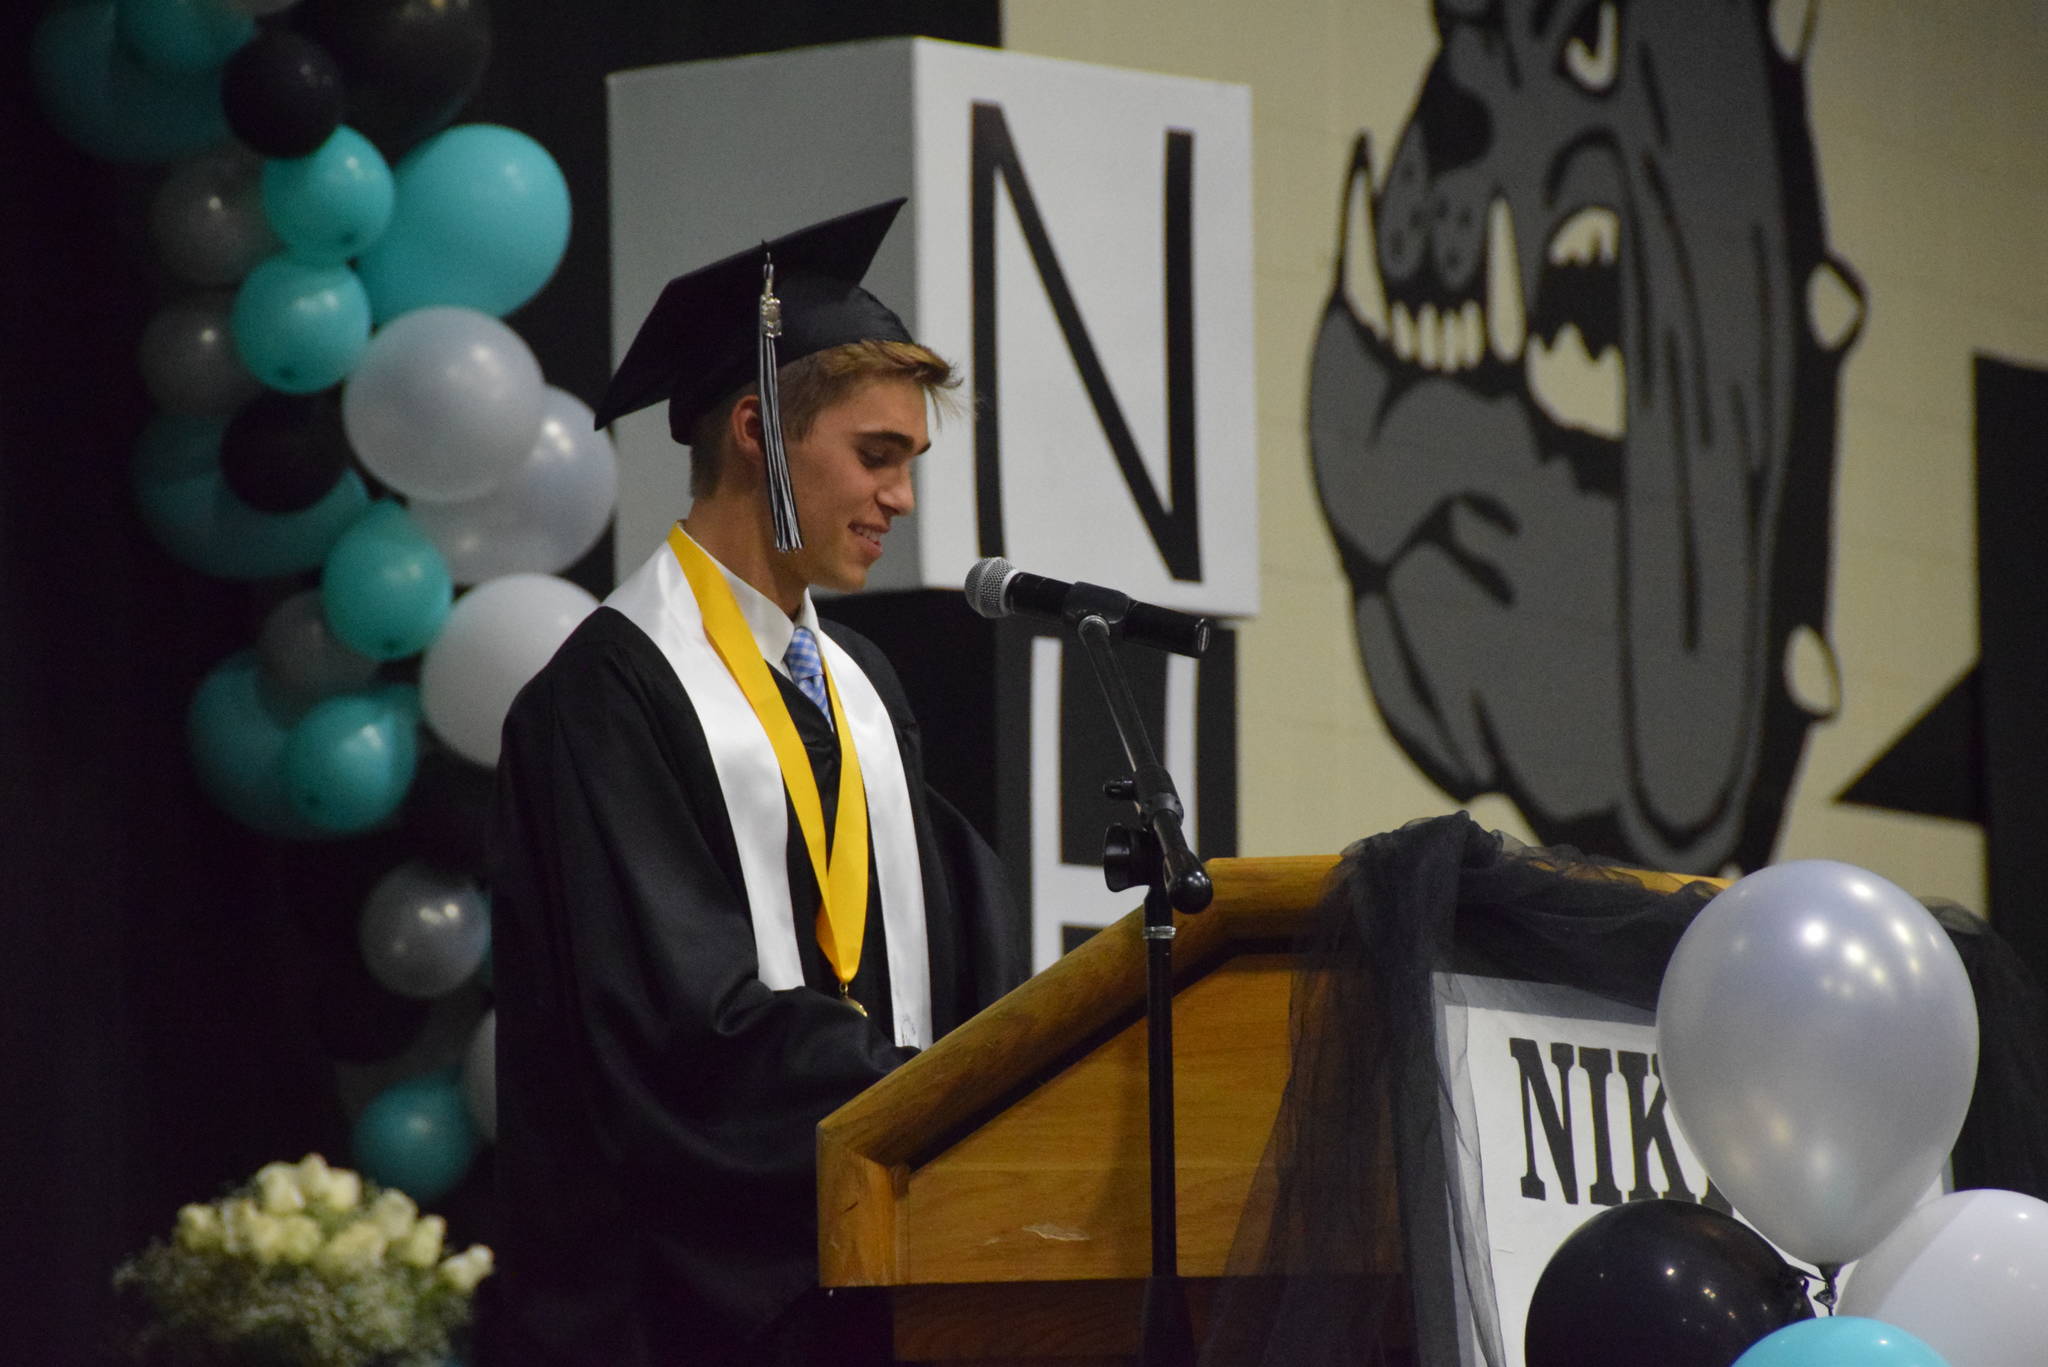 Valedictorian Garrett Ellis gives his speech during the 2019 Nikiski High School graduation in Nikiski, Alaska on May 20, 2019. (Photo by Brian Mazurek/Peninsula Clarion)